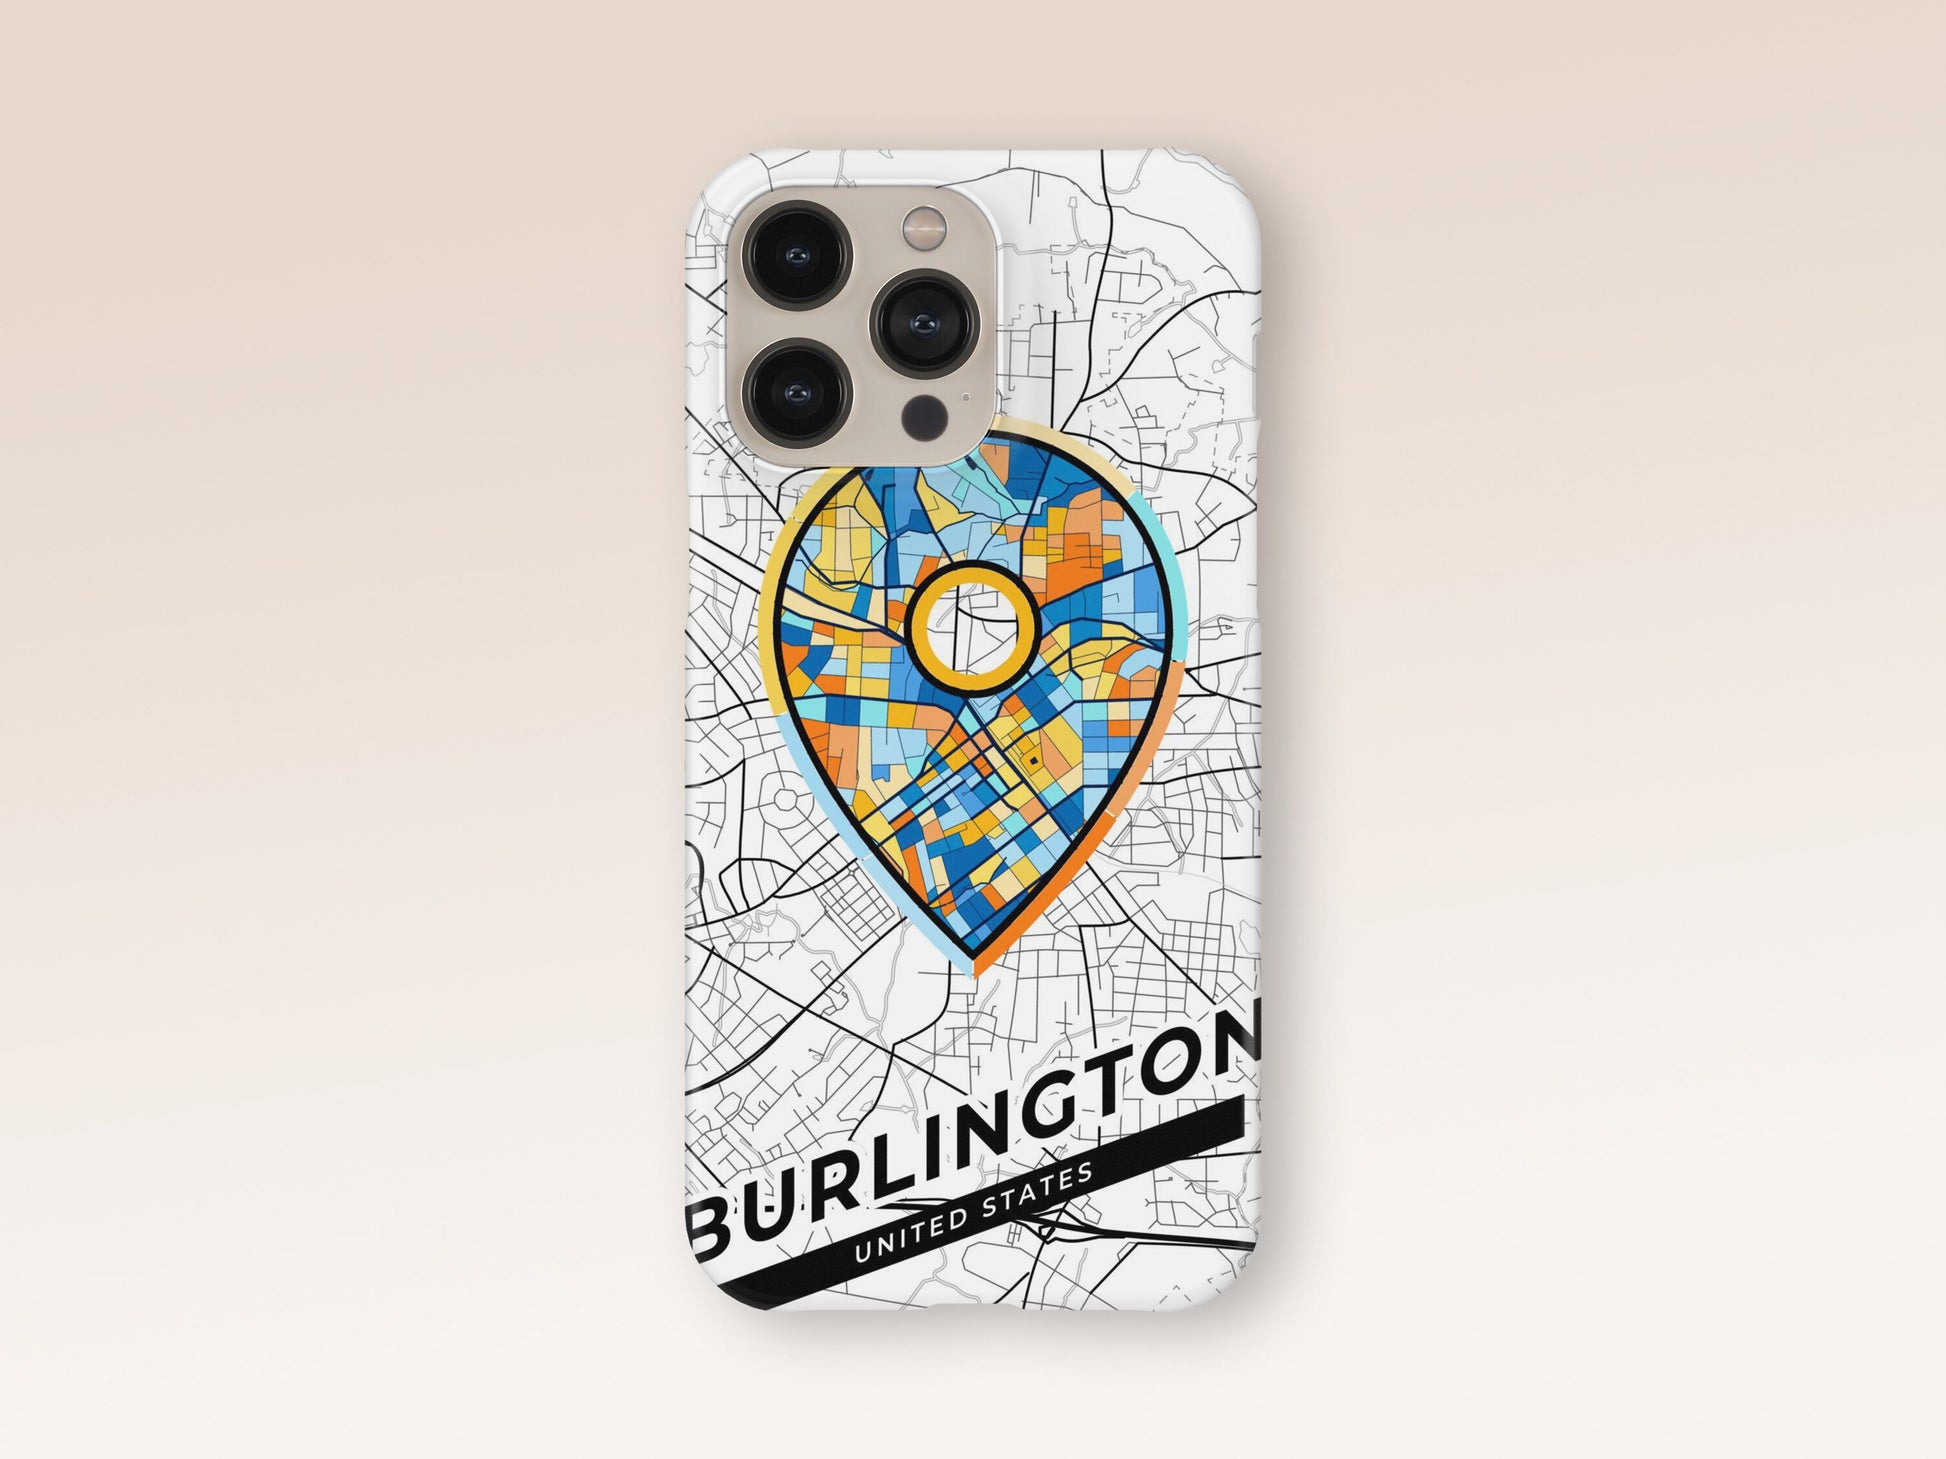 Burlington North Carolina slim phone case with colorful icon. Birthday, wedding or housewarming gift. Couple match cases. 1